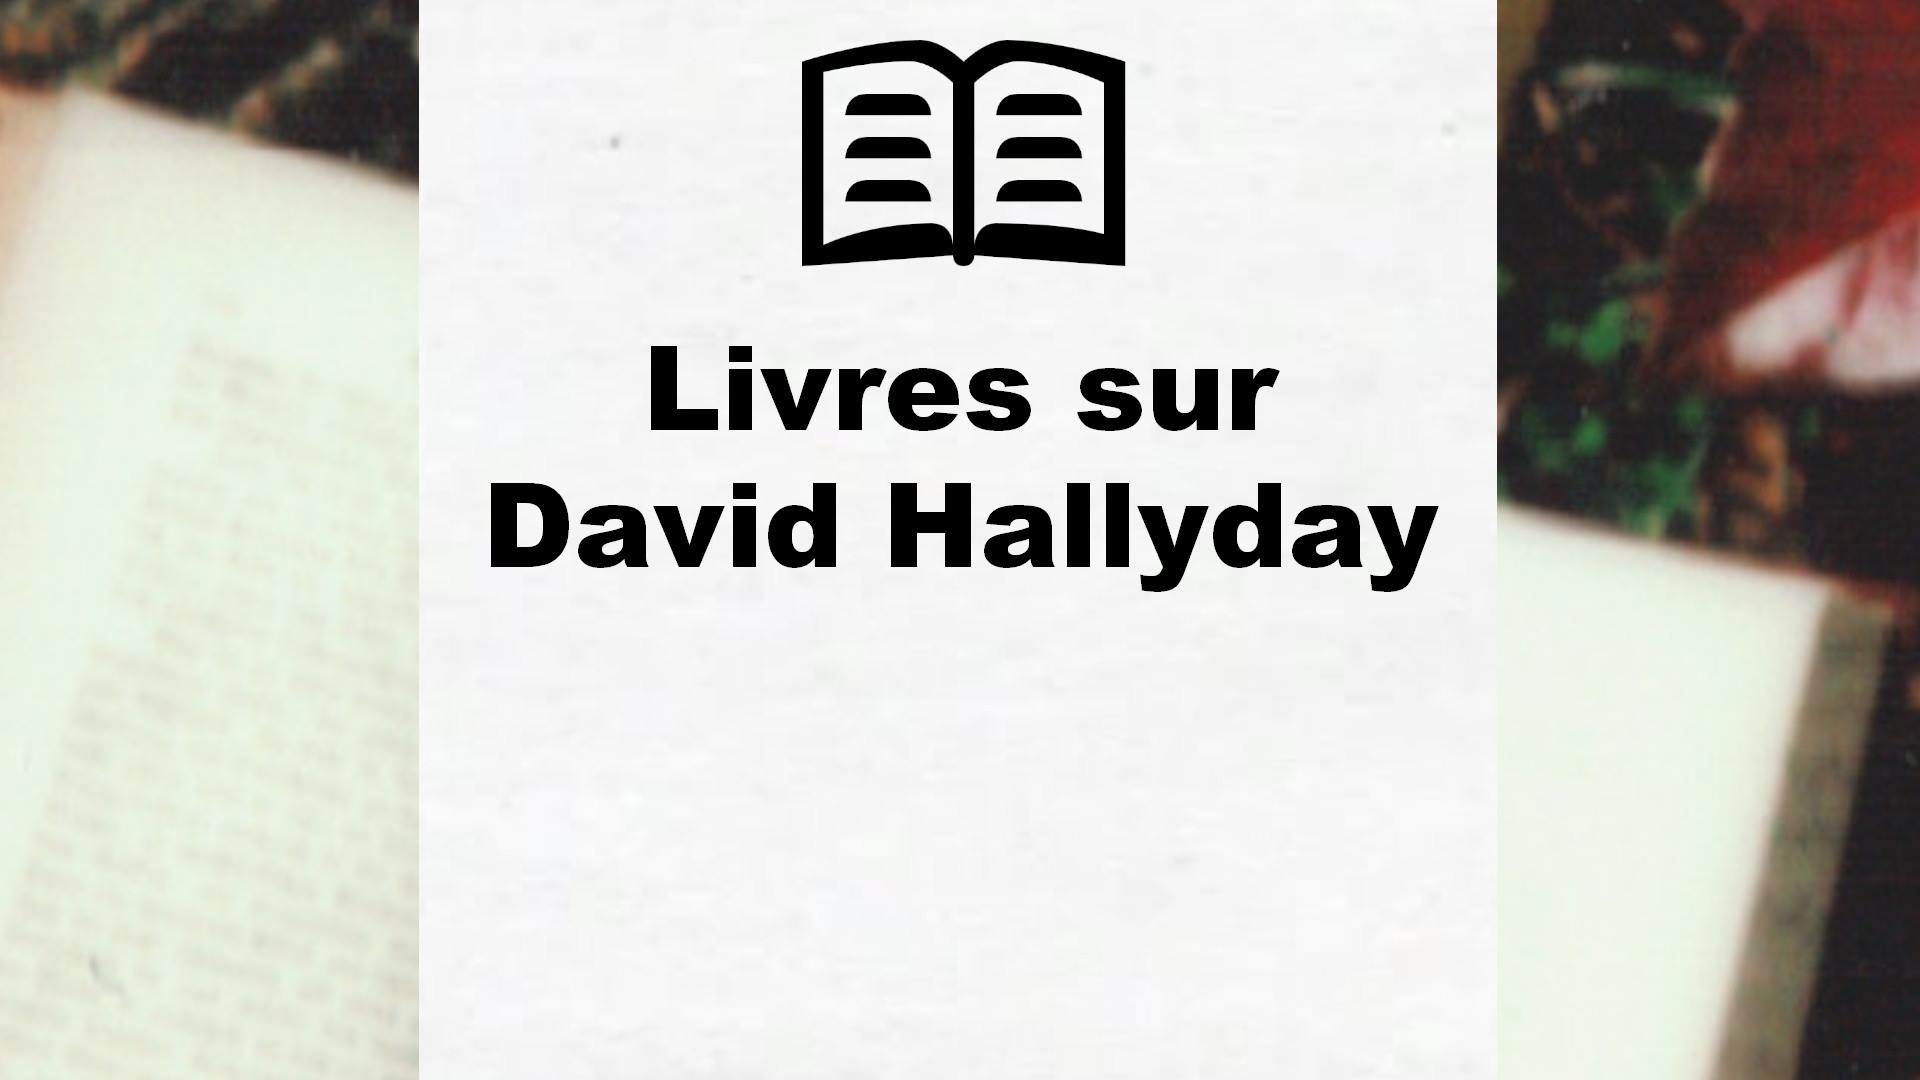 Livres sur David Hallyday